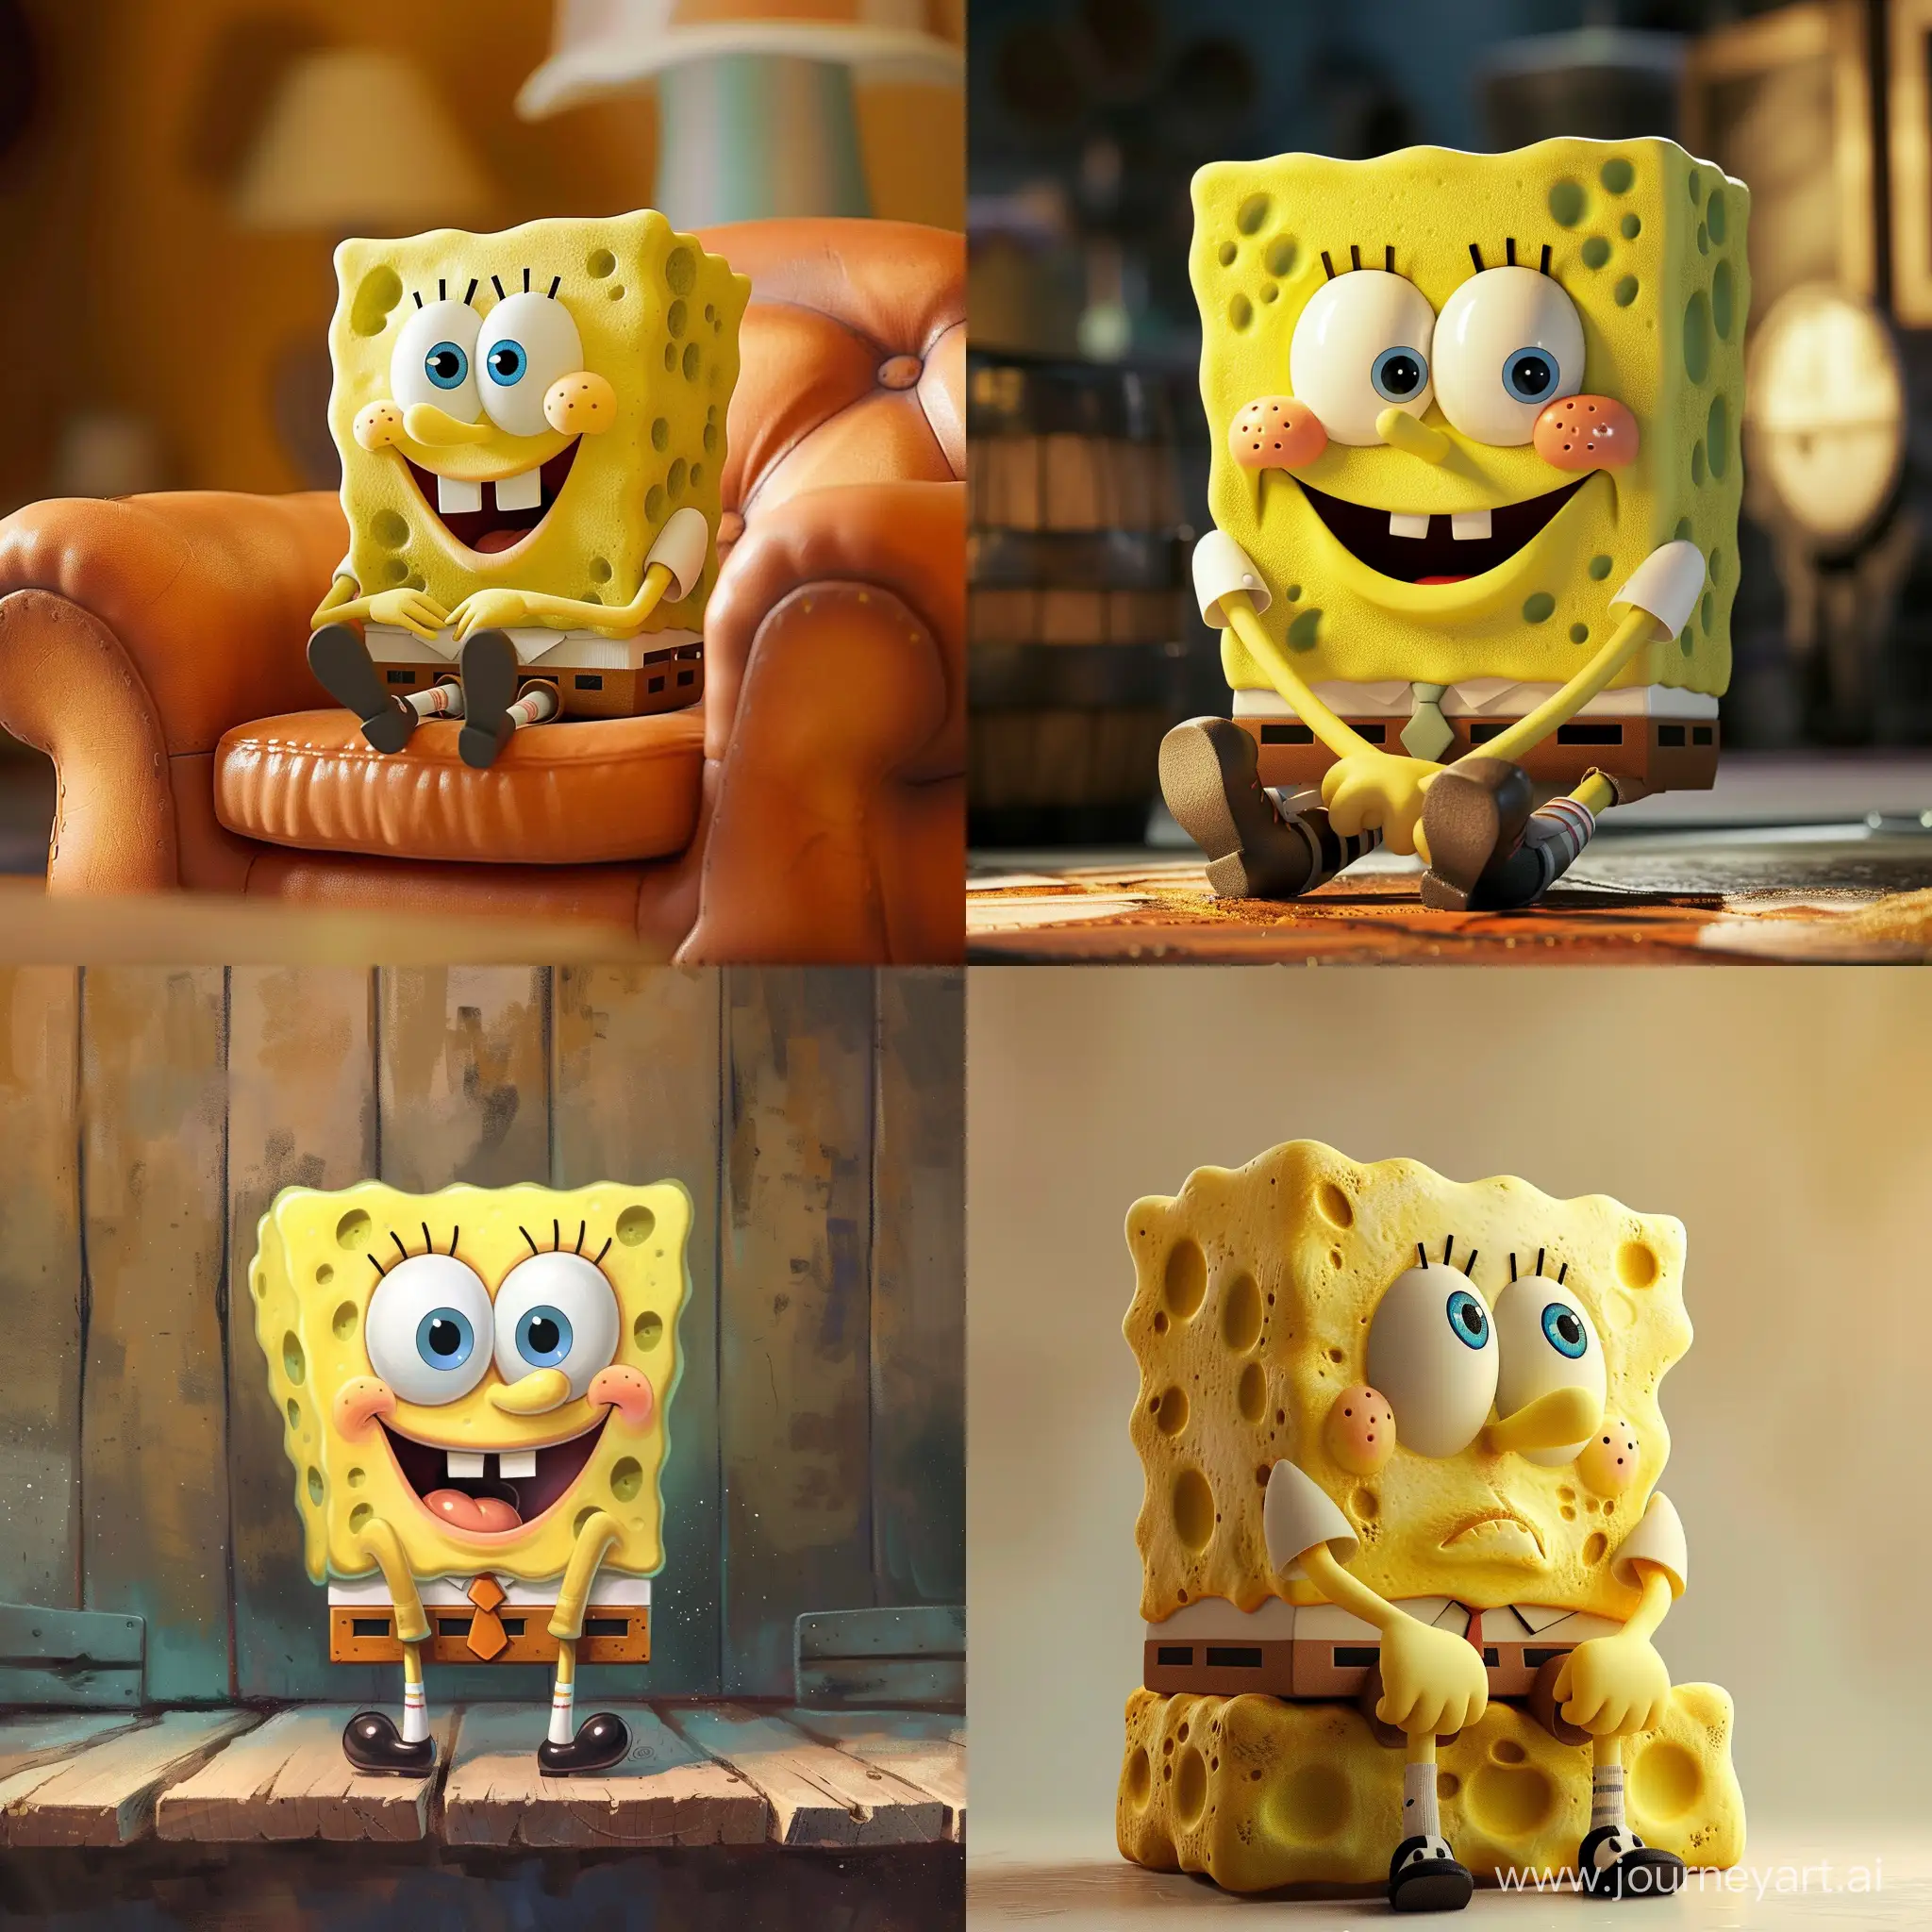 Spongebob sitting